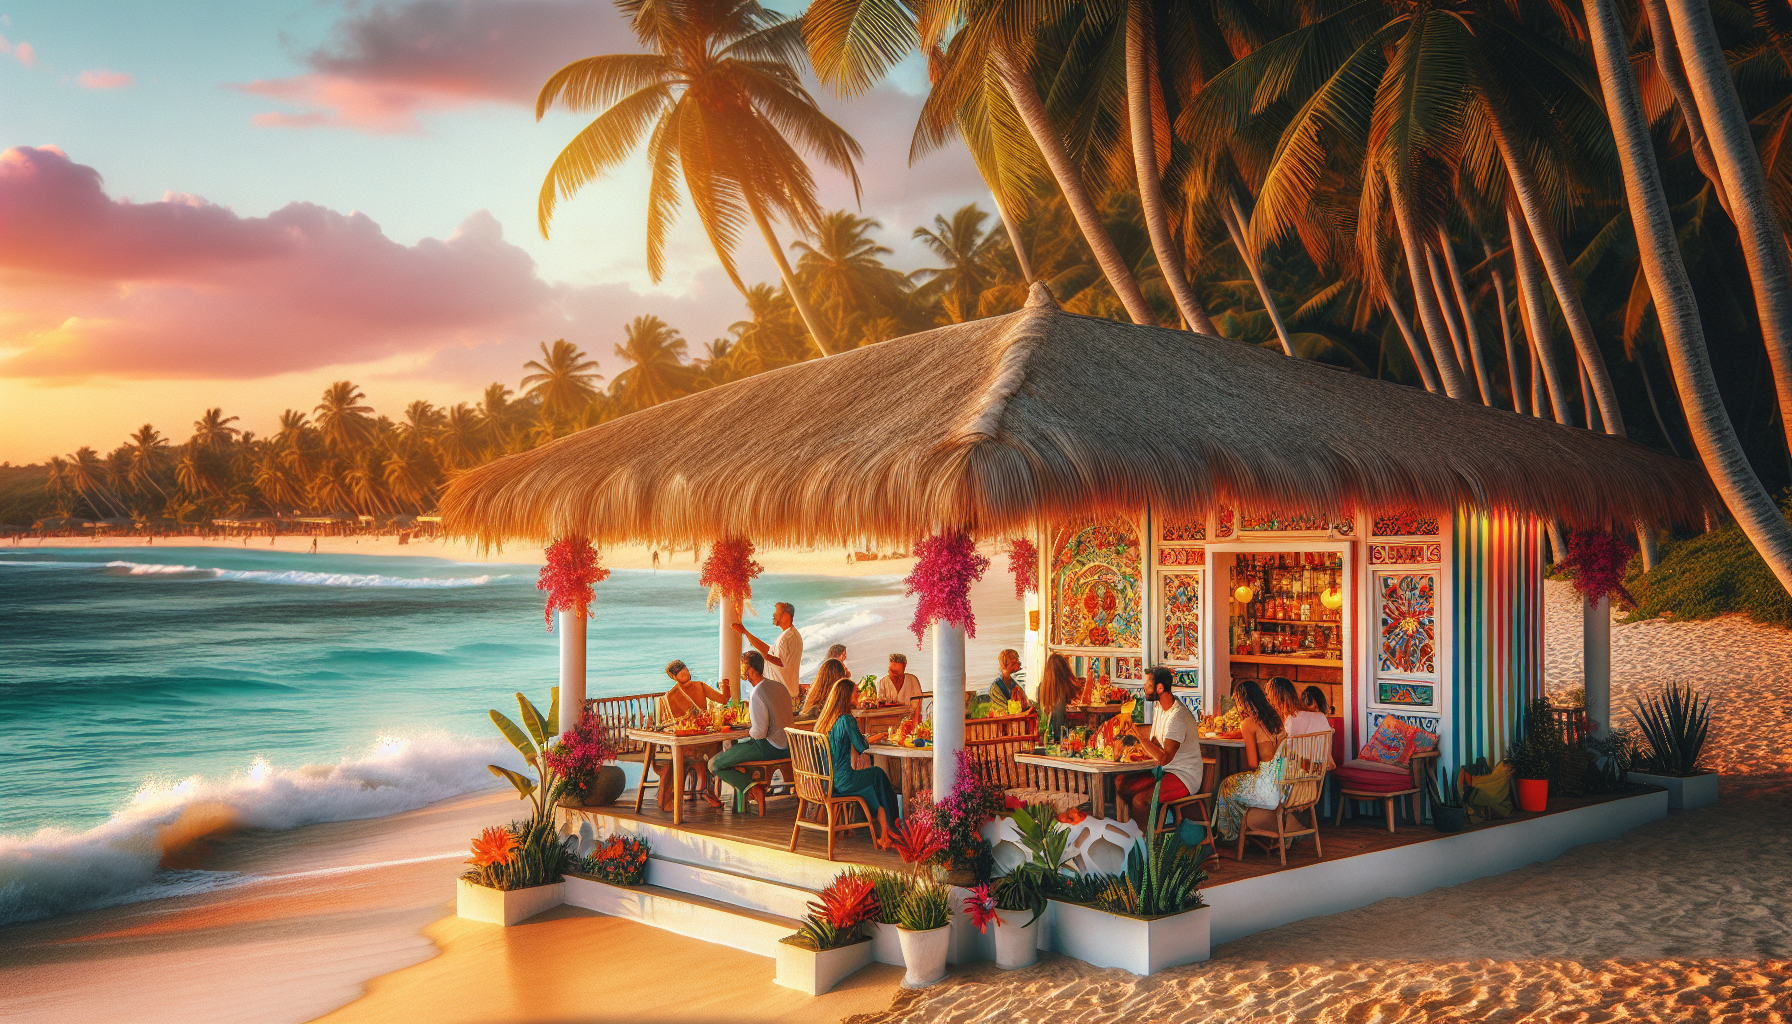 Beachfront dining experience at cabana rentals